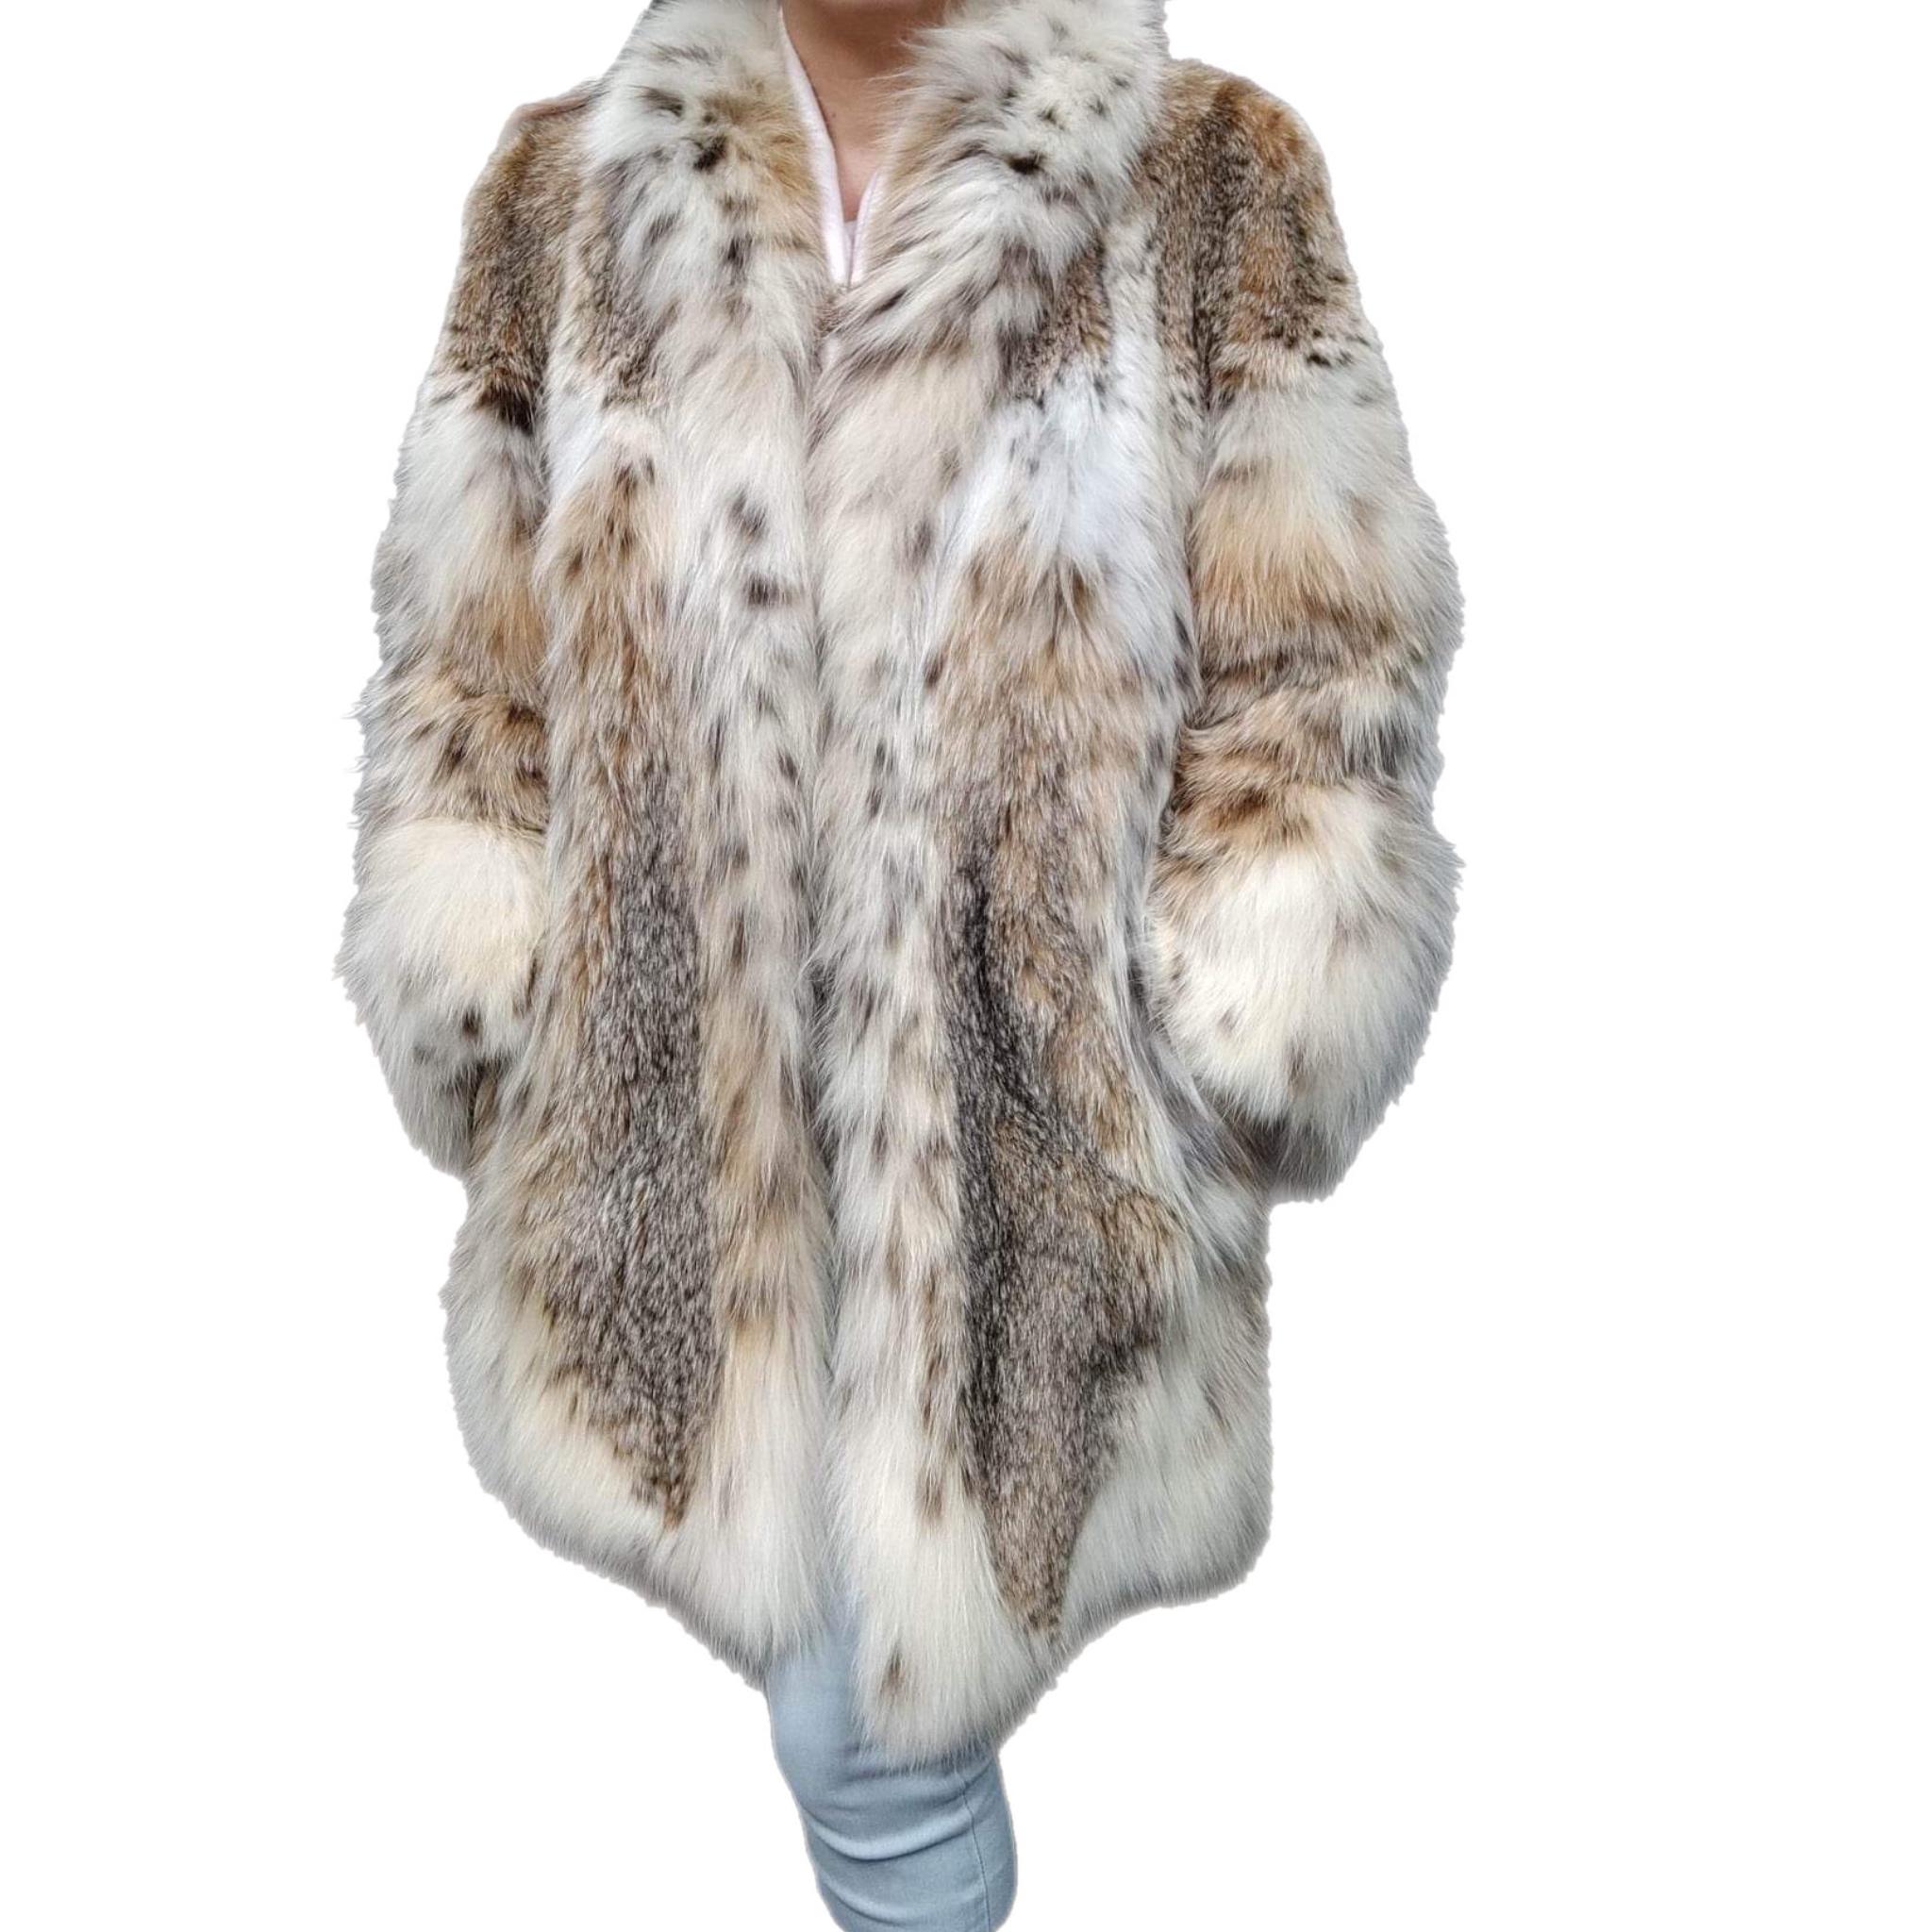 Women's Brand new lightweight lynx fur coat size 12-14